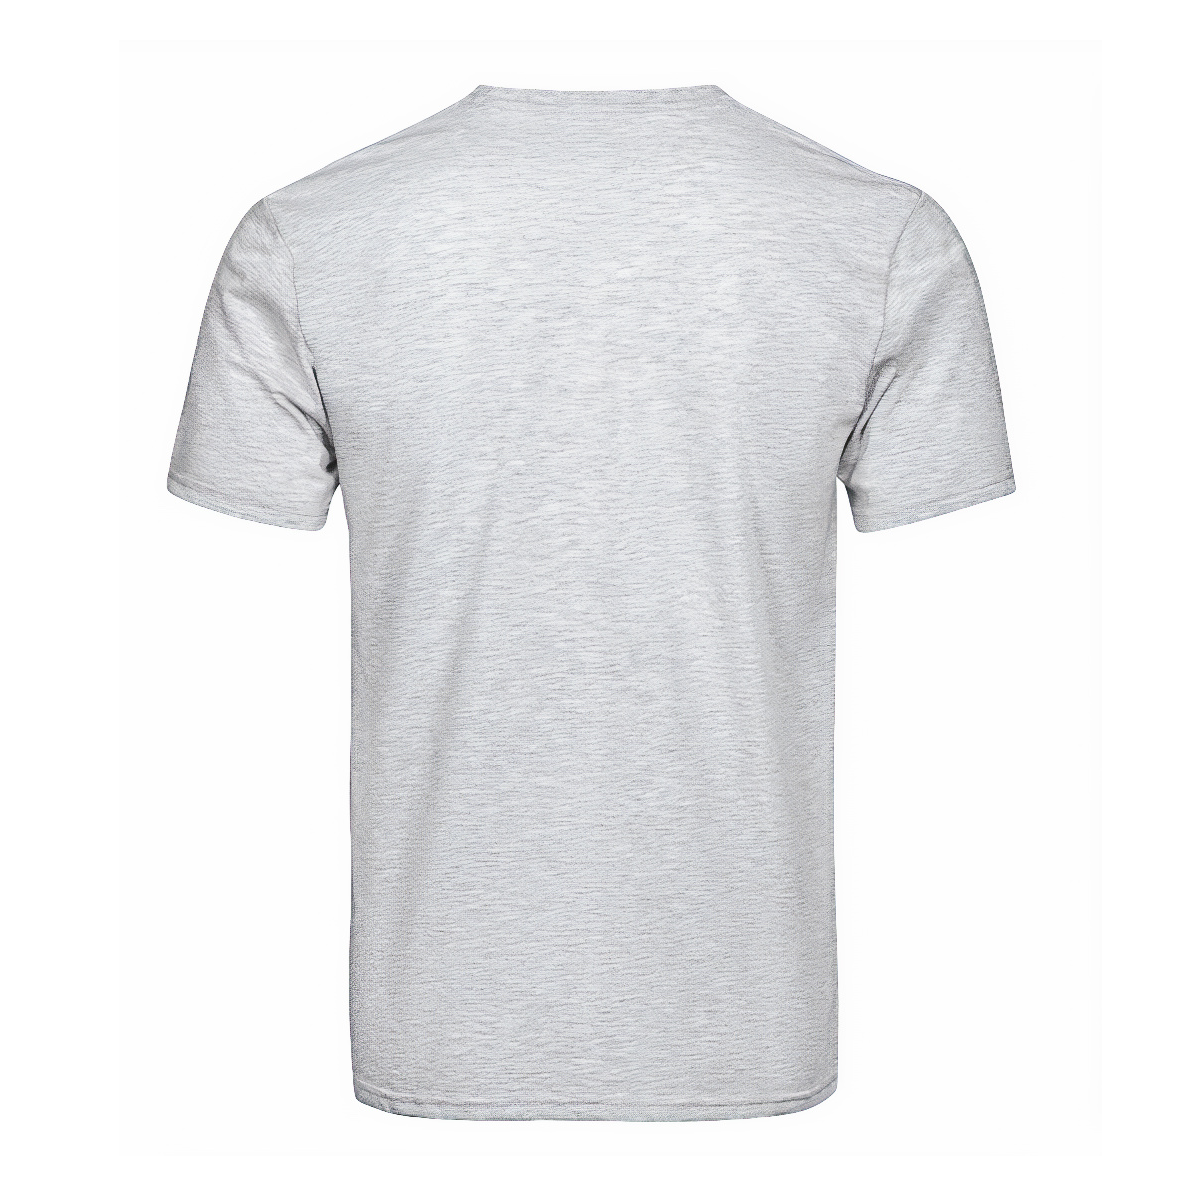 Buchanan Tartan Crest T-shirt - I'm not yelling style